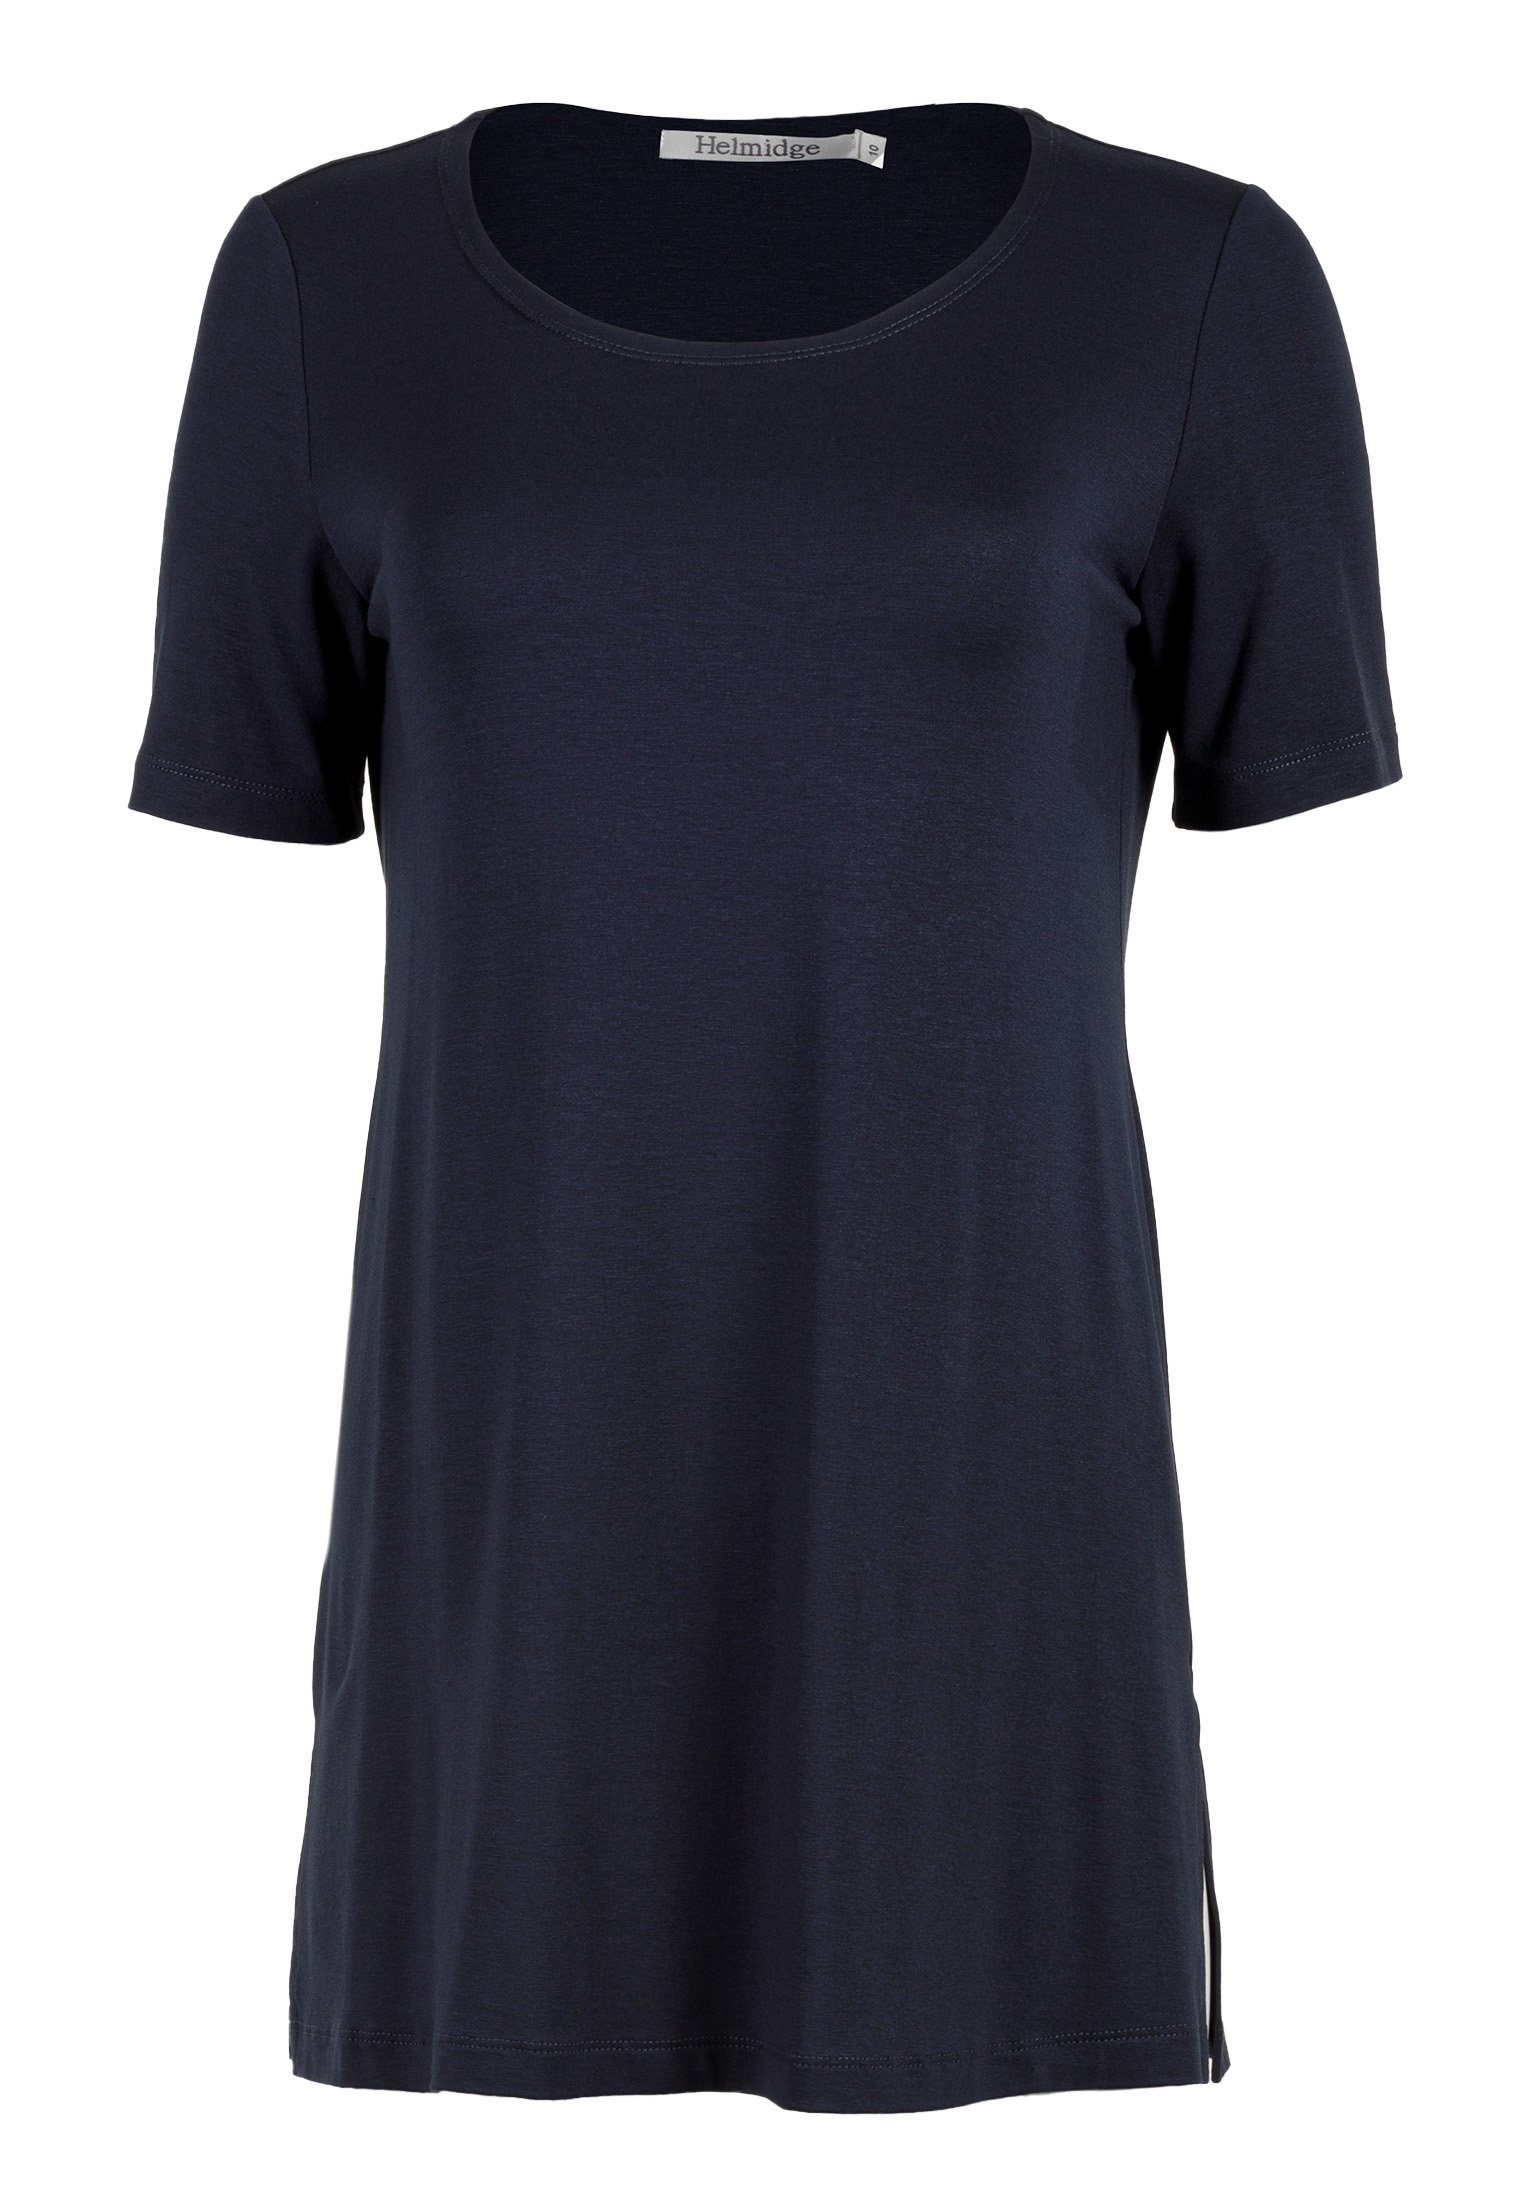 HELMIDGE blau T-Shirt dunkel T-Shirt keine